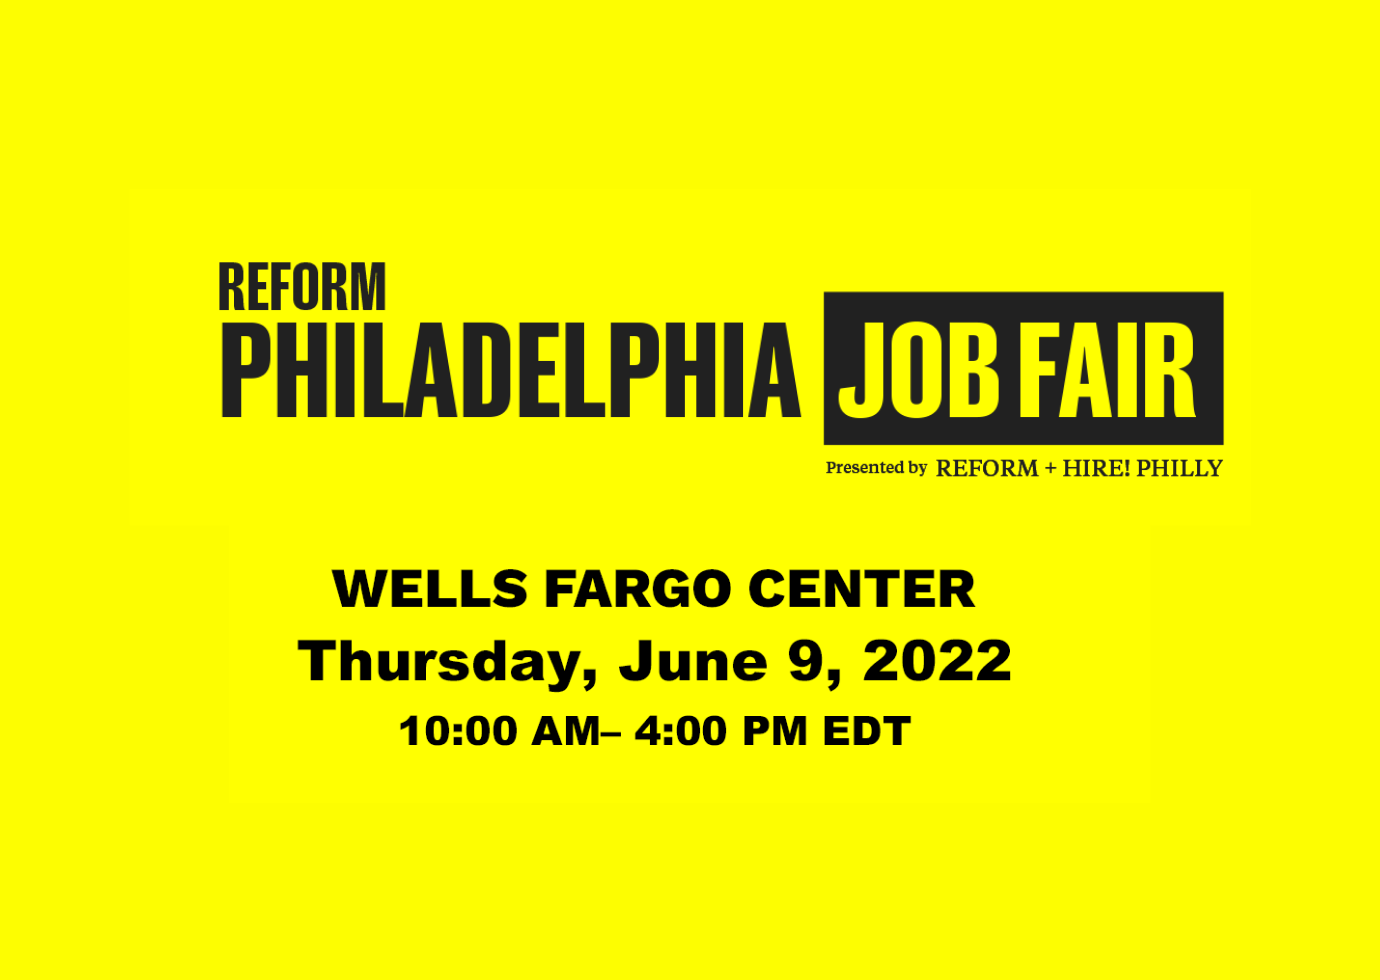 REFORM to Host Philadelphia Job Fair REFORM Alliance